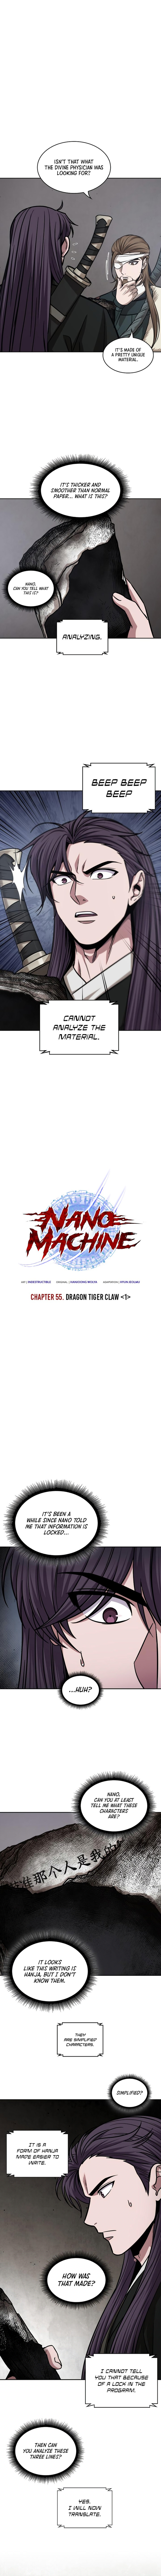 Nano Machine Chapter 156 Page 1